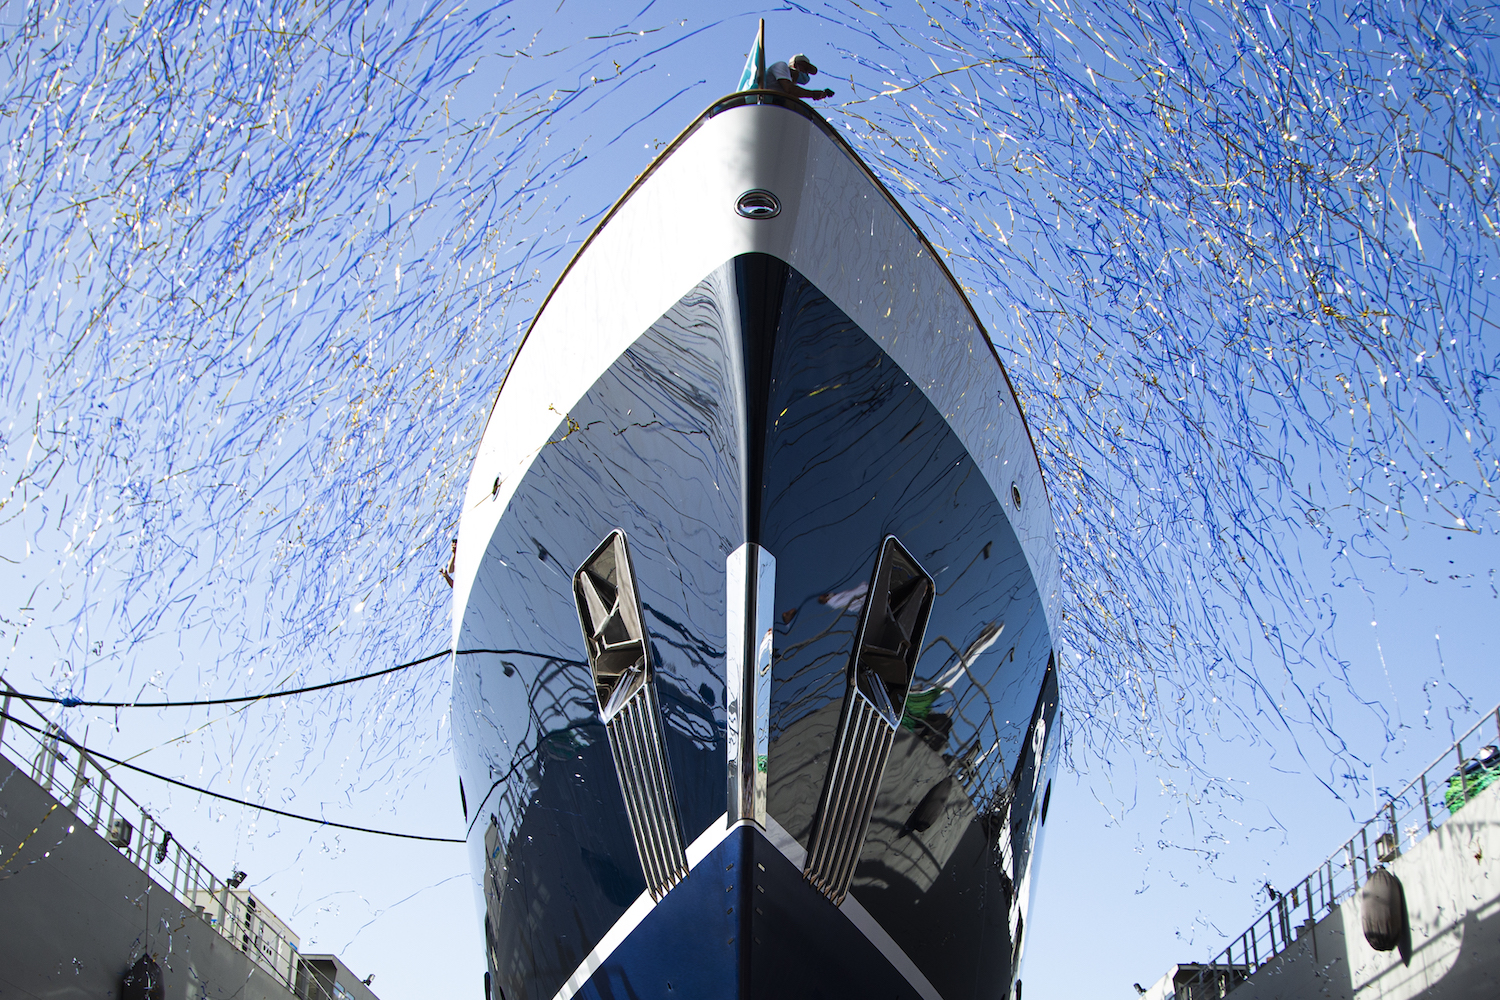 Explorer Motor Yacht BLUE II Launched In Turkey